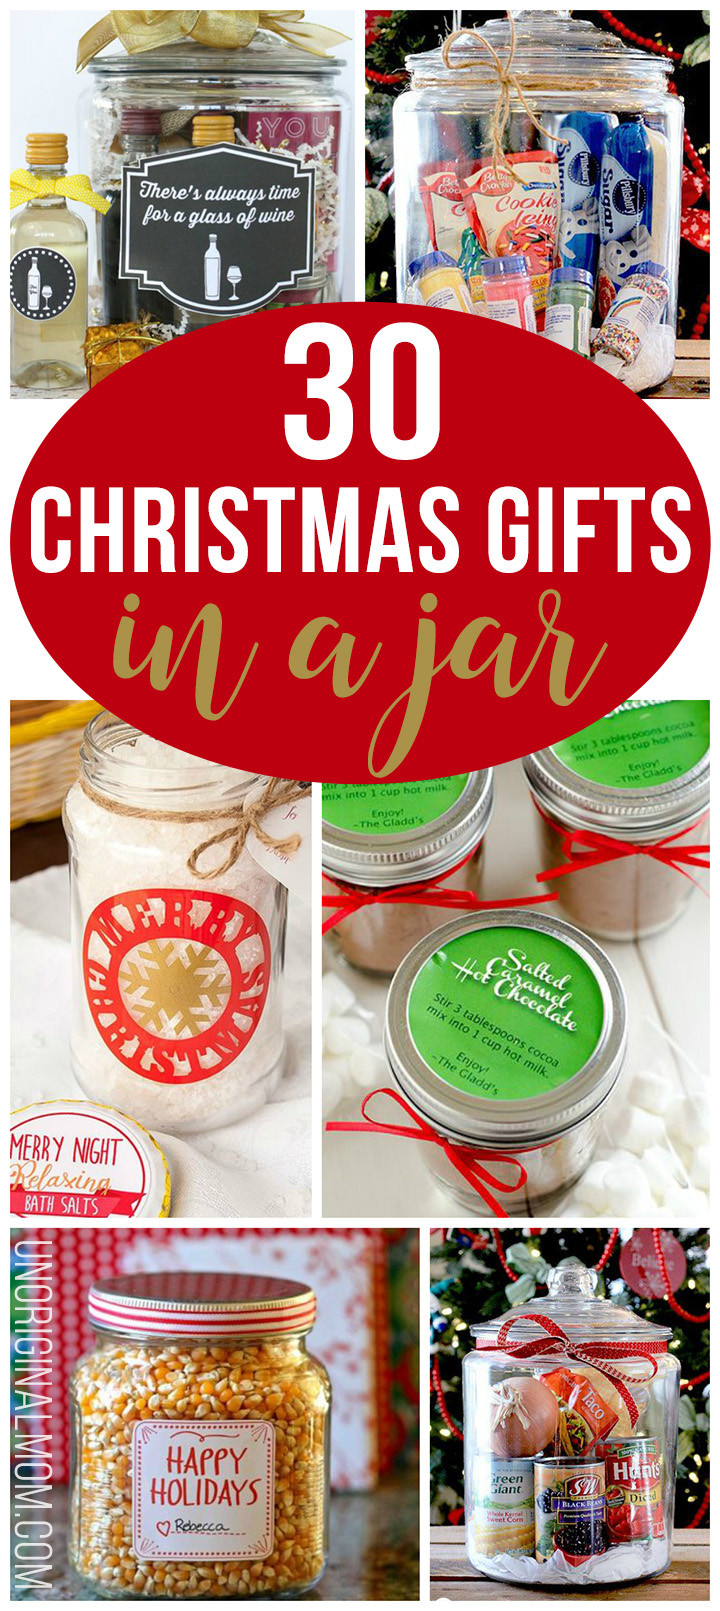 Fun DIY Christmas Gifts
 30 Christmas Gifts in a Jar unOriginal Mom